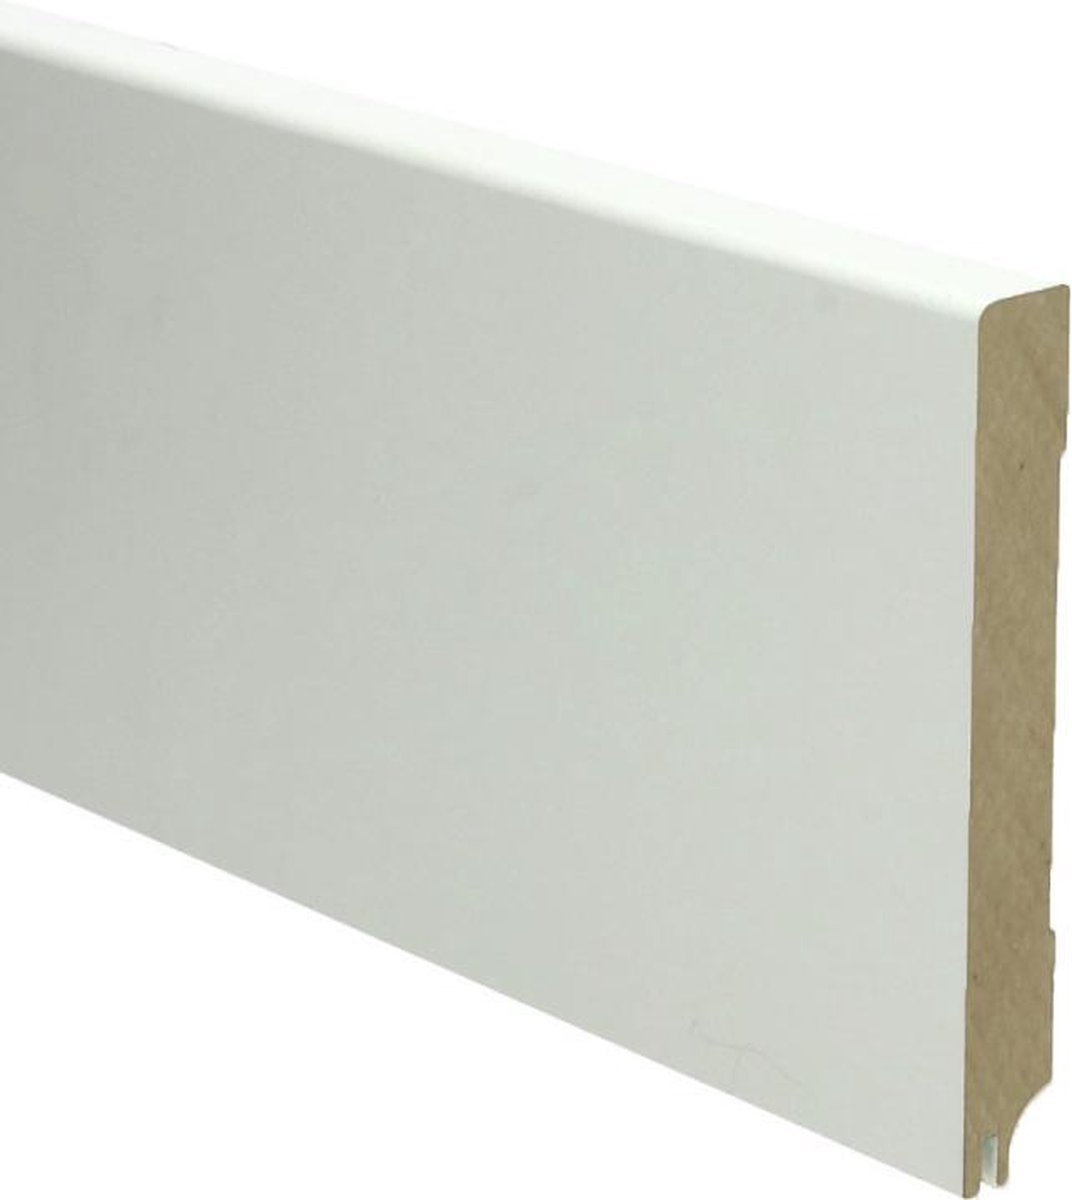 Hoge plinten - MDF - Moderne plint 120x15 mm - Wit - Voorgelakt - RAL 9010 - Geluiddempend- Per 5 stuks 2,4m